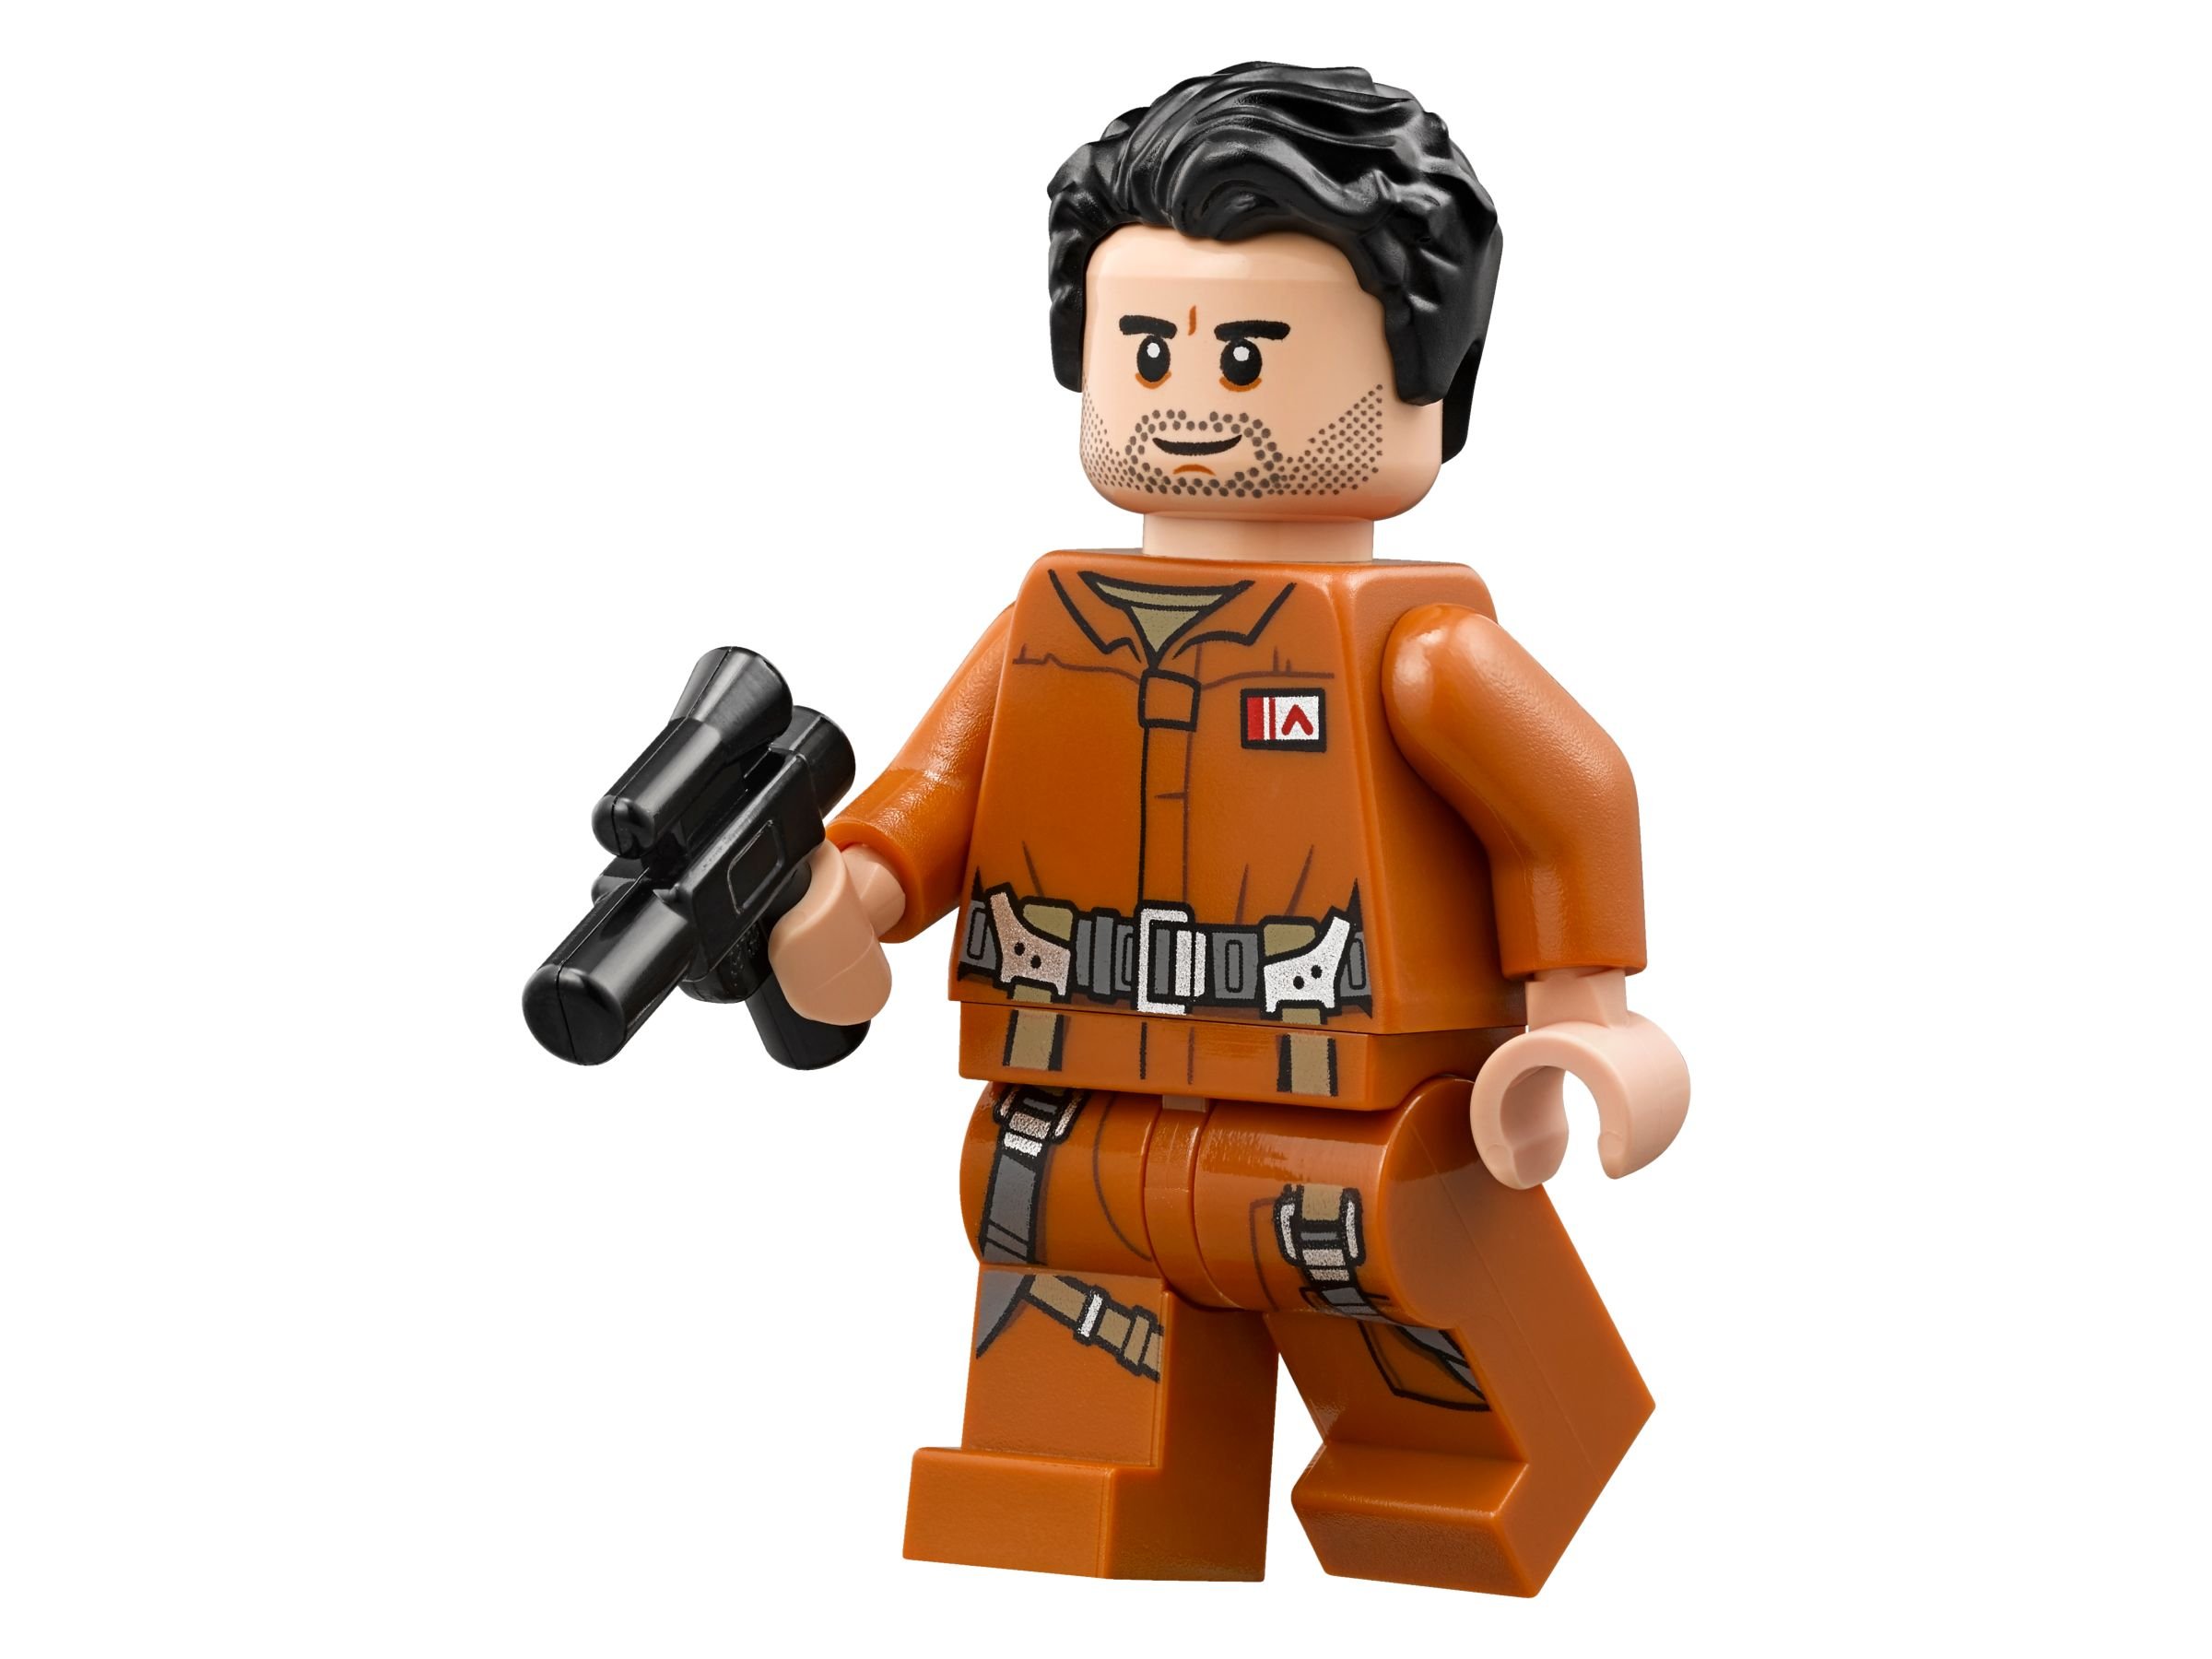 LEGO Star Wars 75188 Resistance Bomber LEGO_75188_alt12.jpg